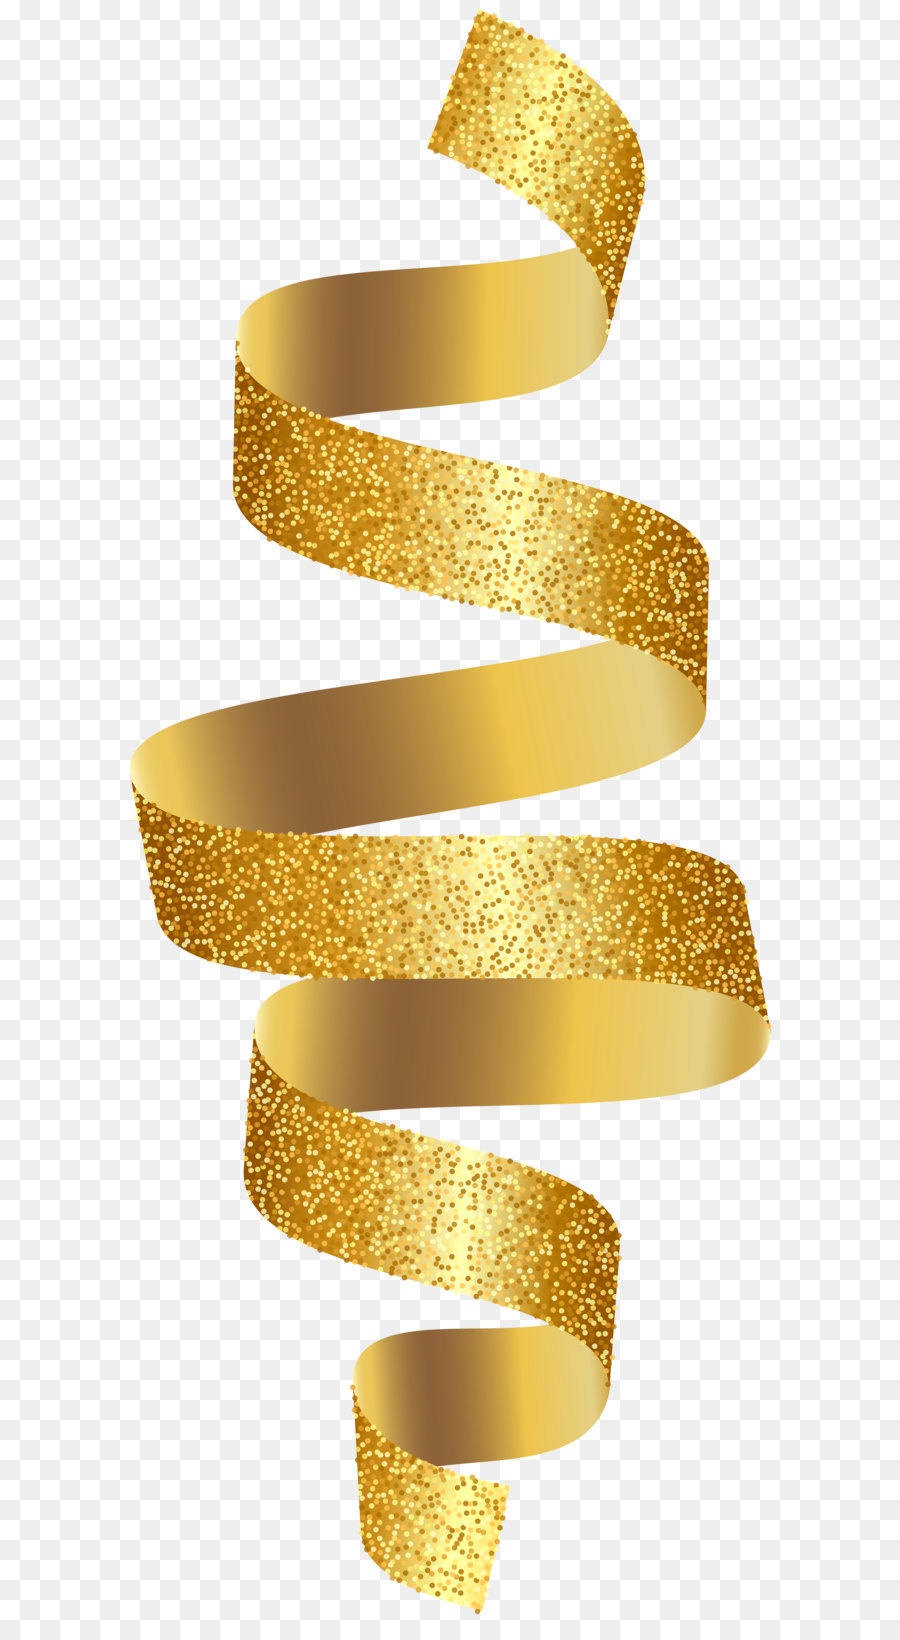 Gold Ribbon clipart - Gold Ribbon PNG Transparent clipart Bild